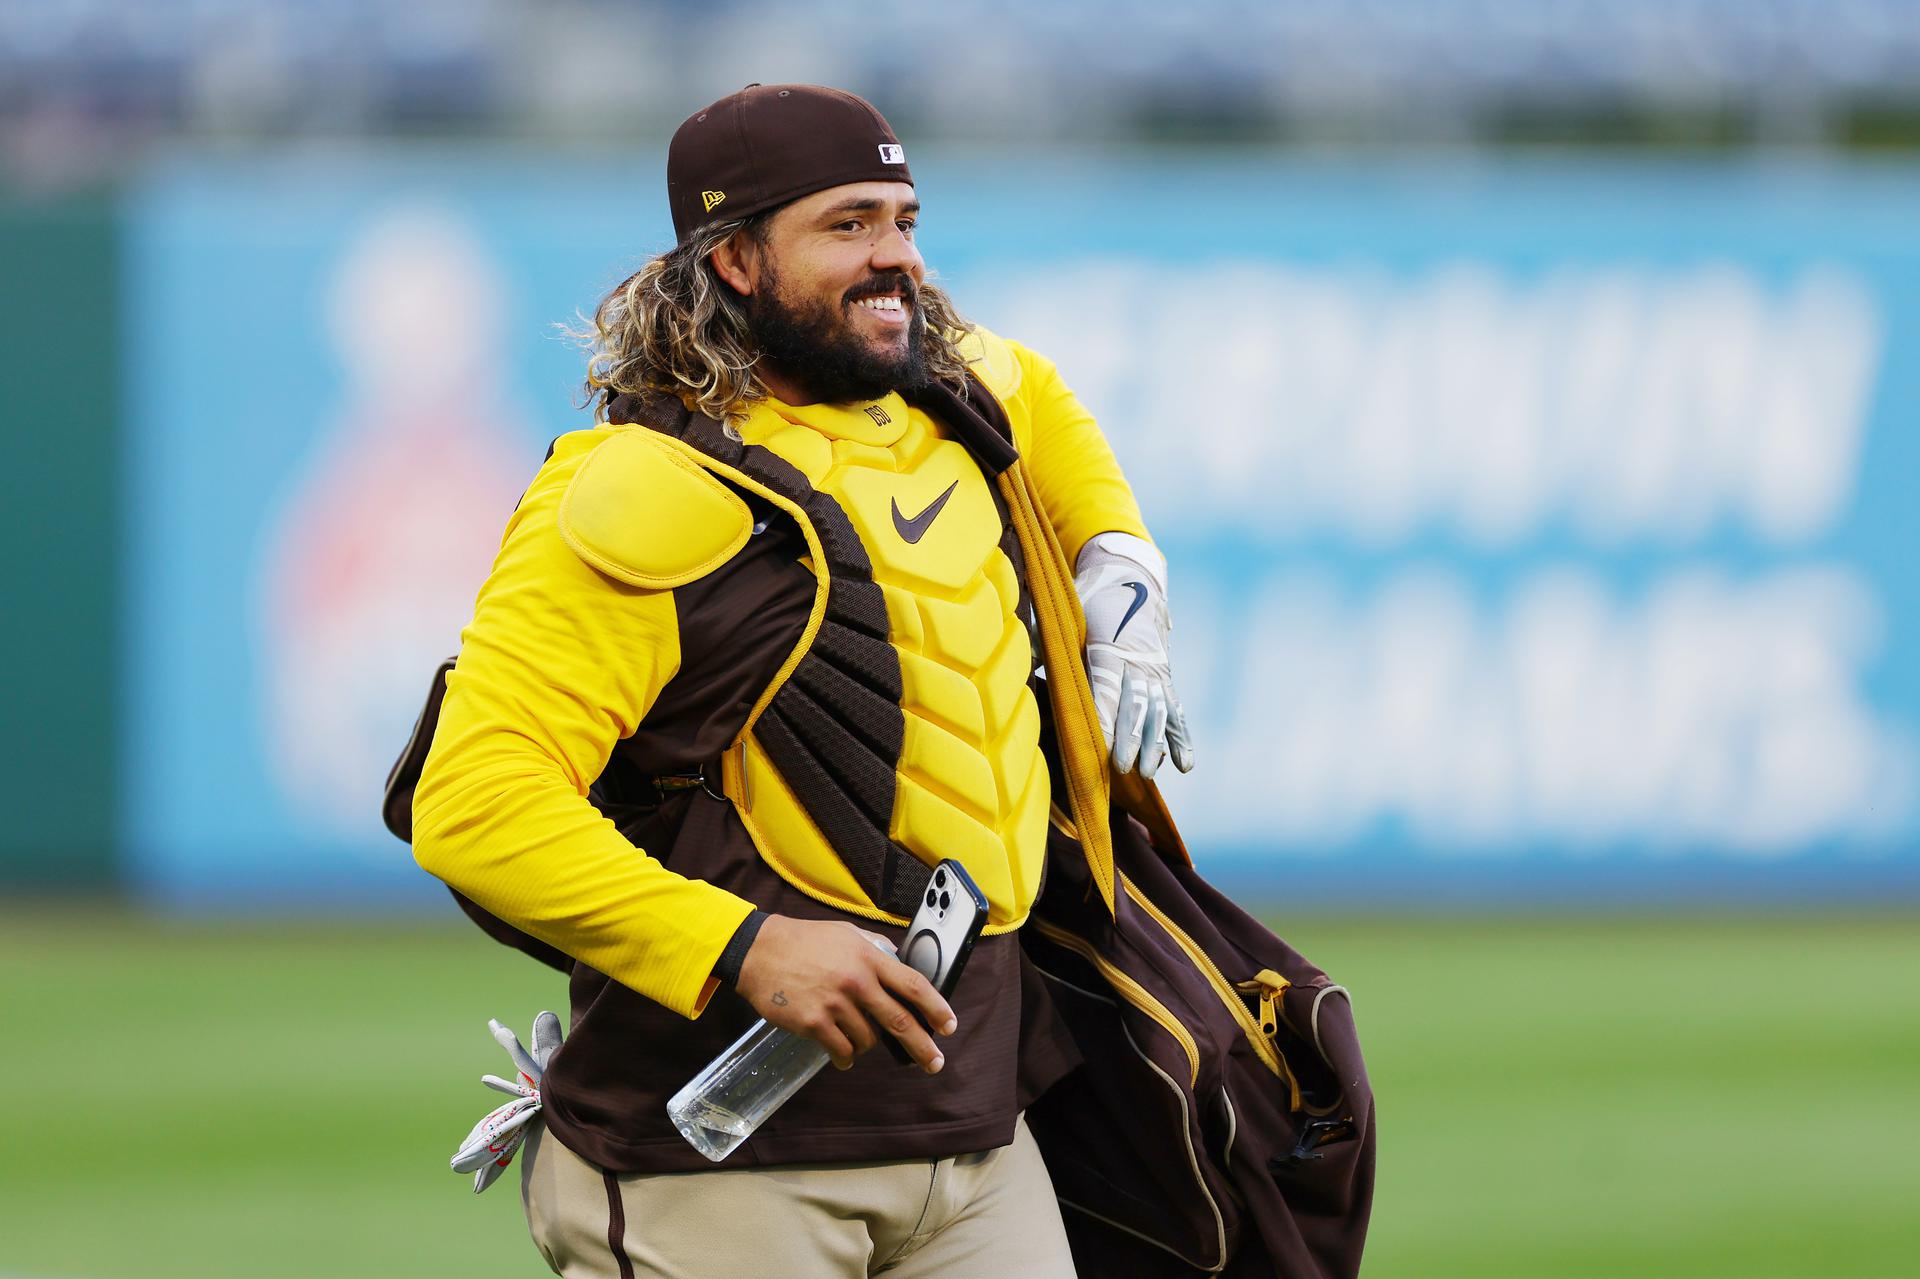 Jorge Alfaro walks across the field wearing his catcher gear and carrying a baseball bag